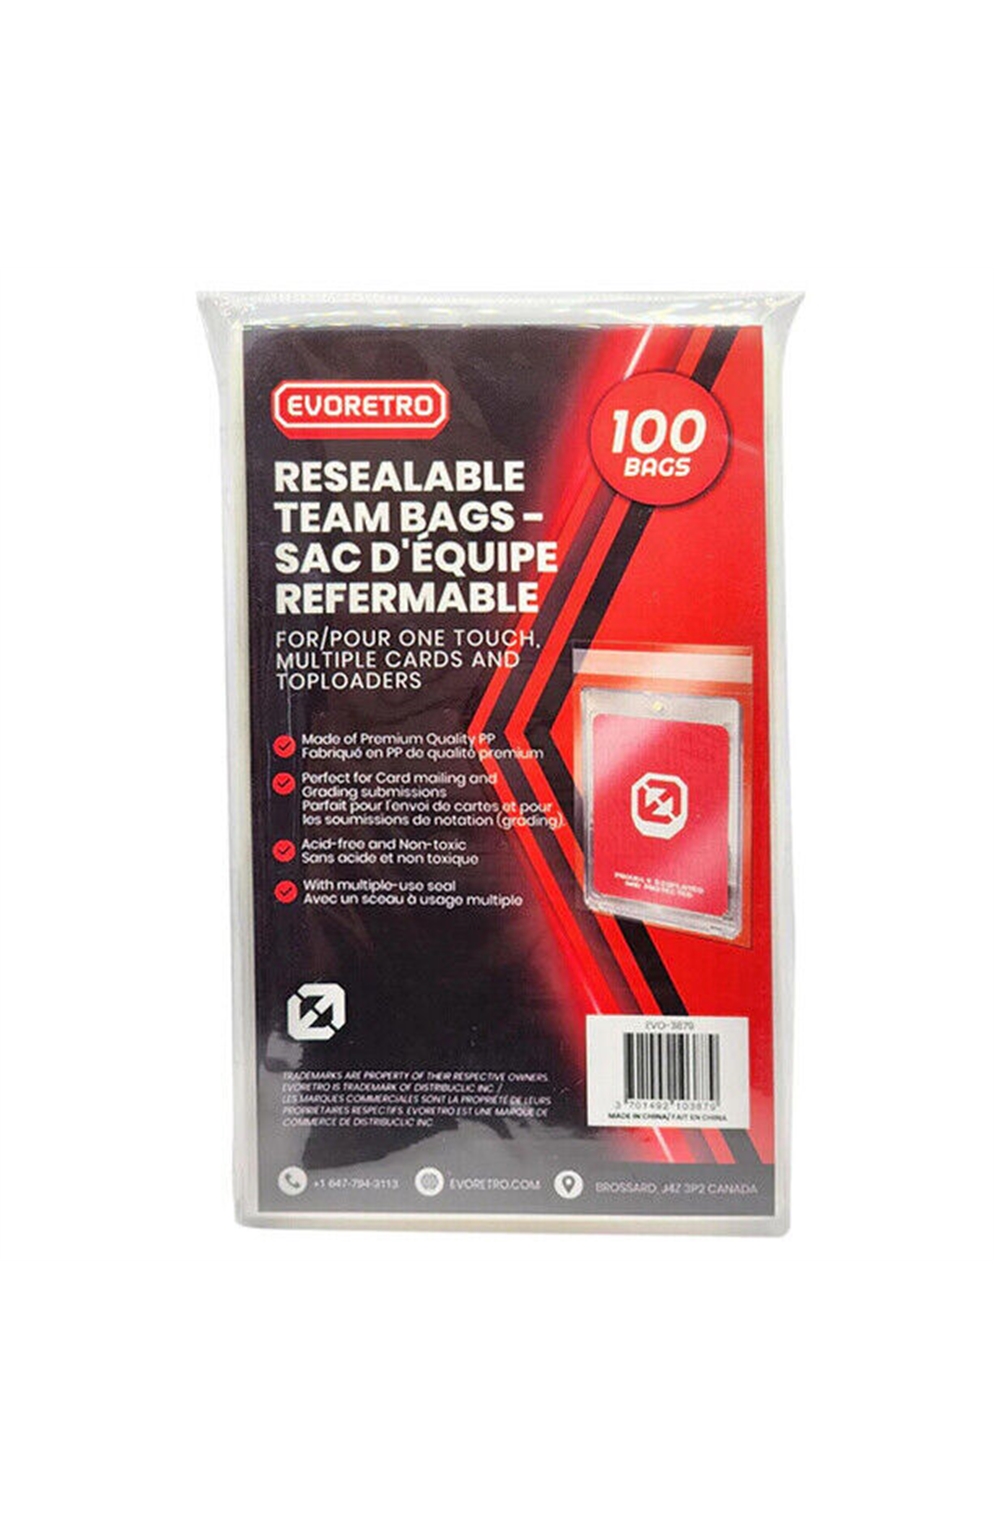 Evoretro Bags: Resealable Team Bags (100)